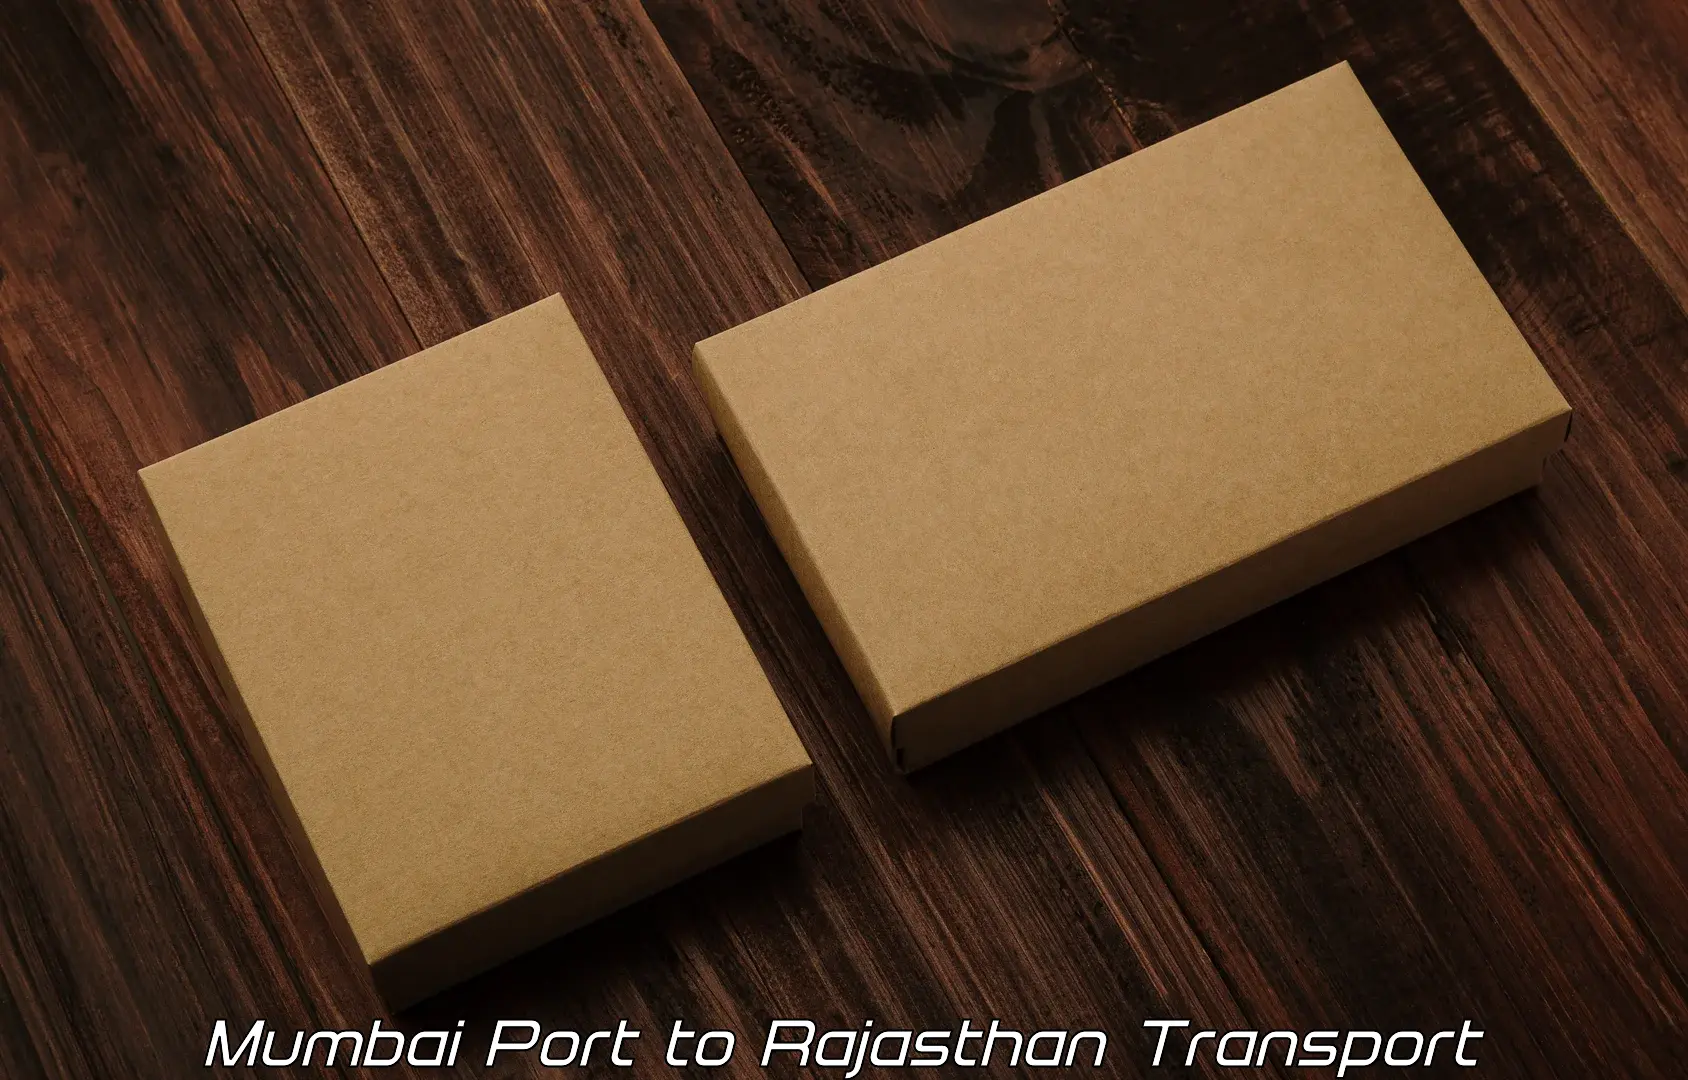 Air freight transport services Mumbai Port to Sawai Madhopur